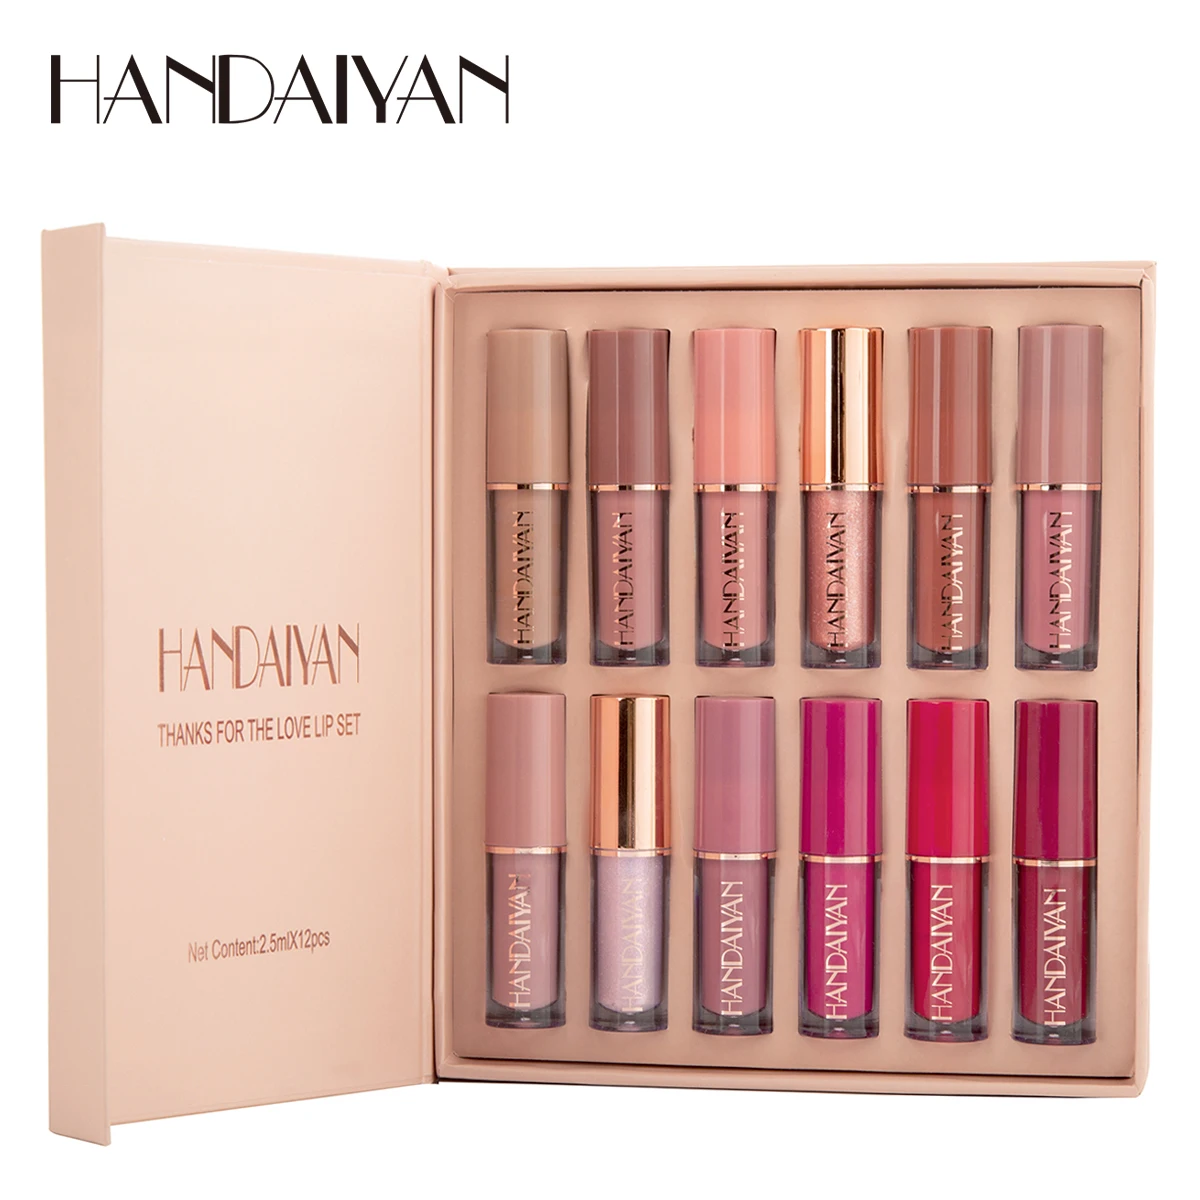 

HANDAIYAN 12 Colors Lip Gloss Gift Set Natural Moisturizer Women's Cosmetic Makeup Waterproof Lipstick